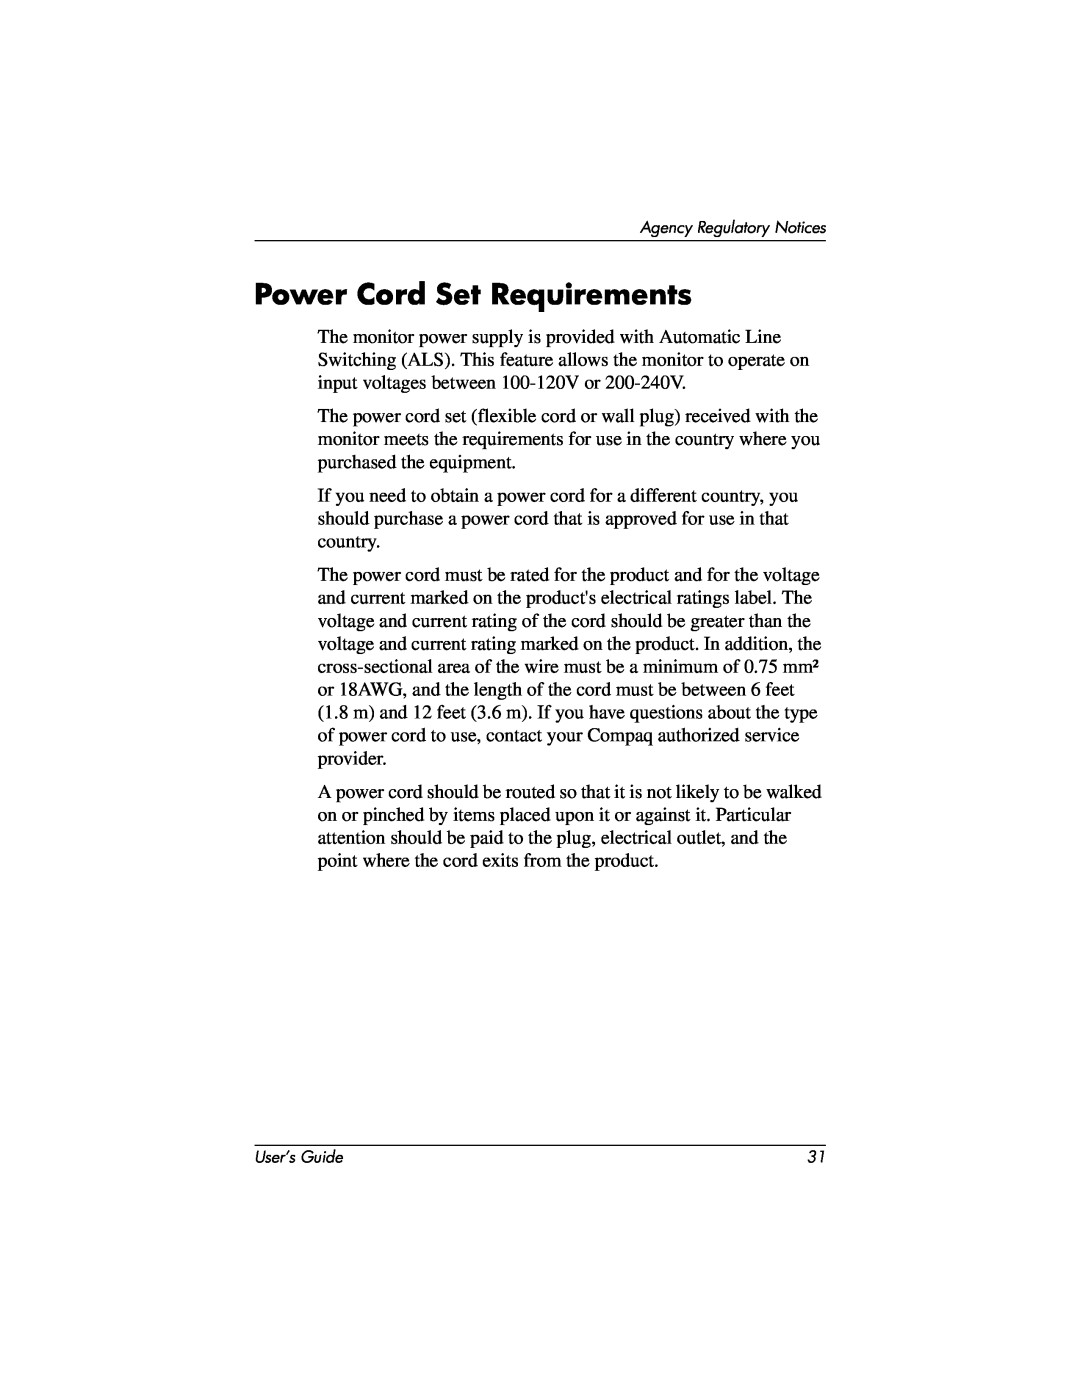 Compaq 2025 manual Power Cord Set Requirements 